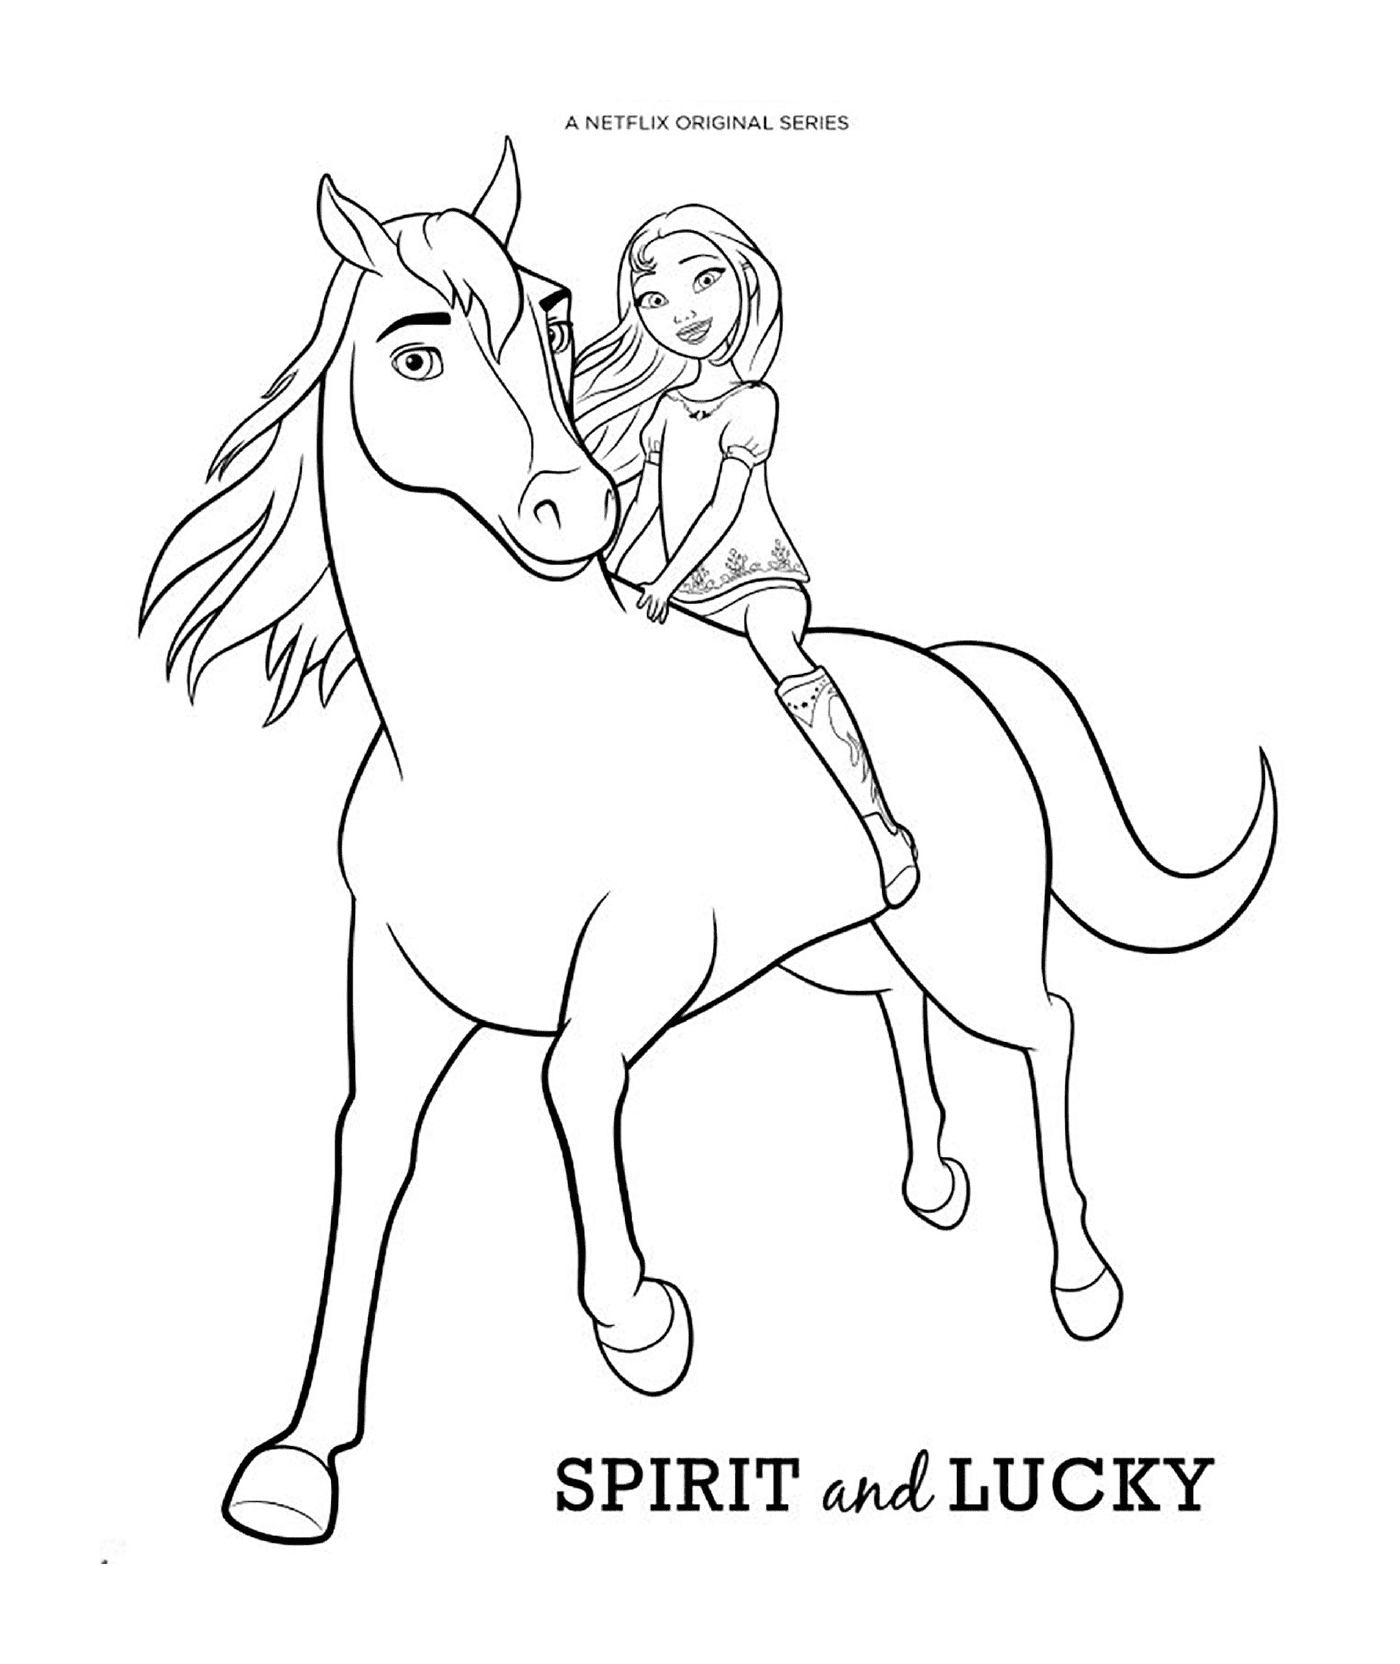  Espíritu de caballo y suerte 